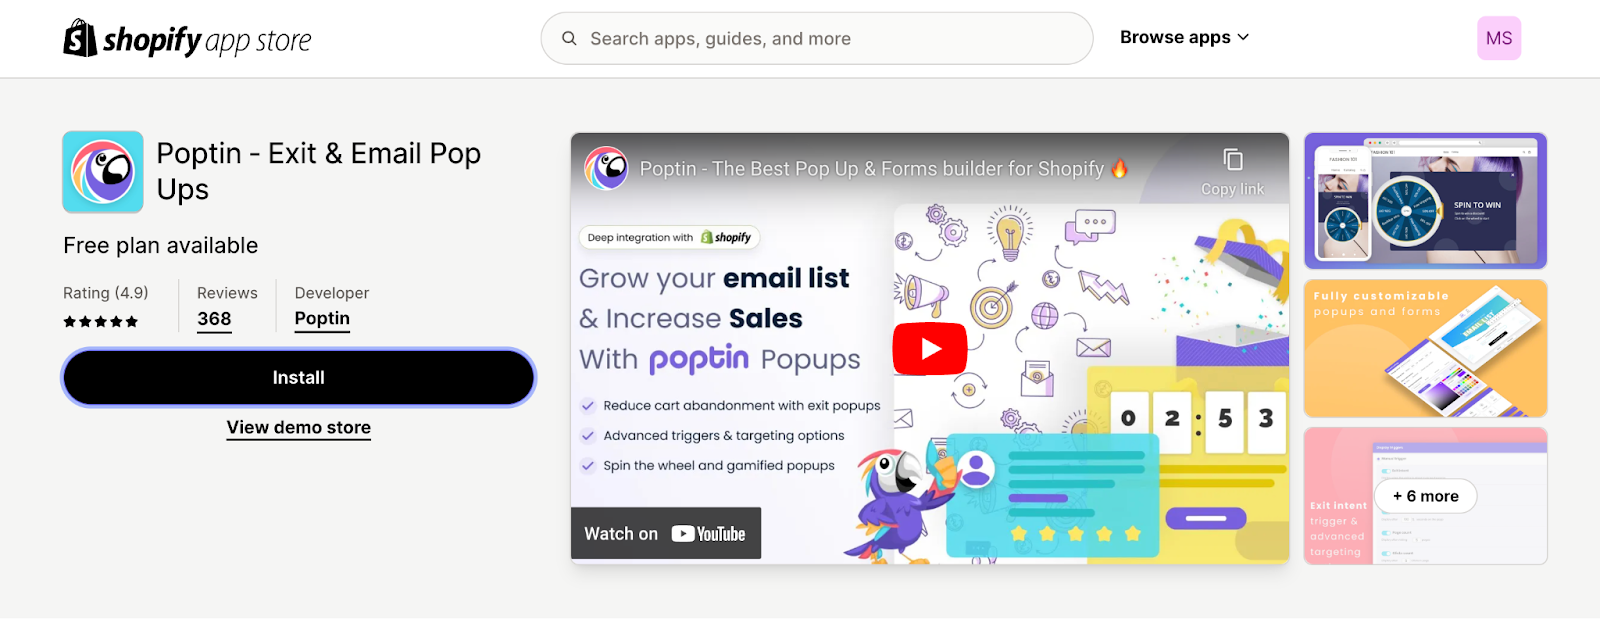 Poptin-App im Shopify App Store